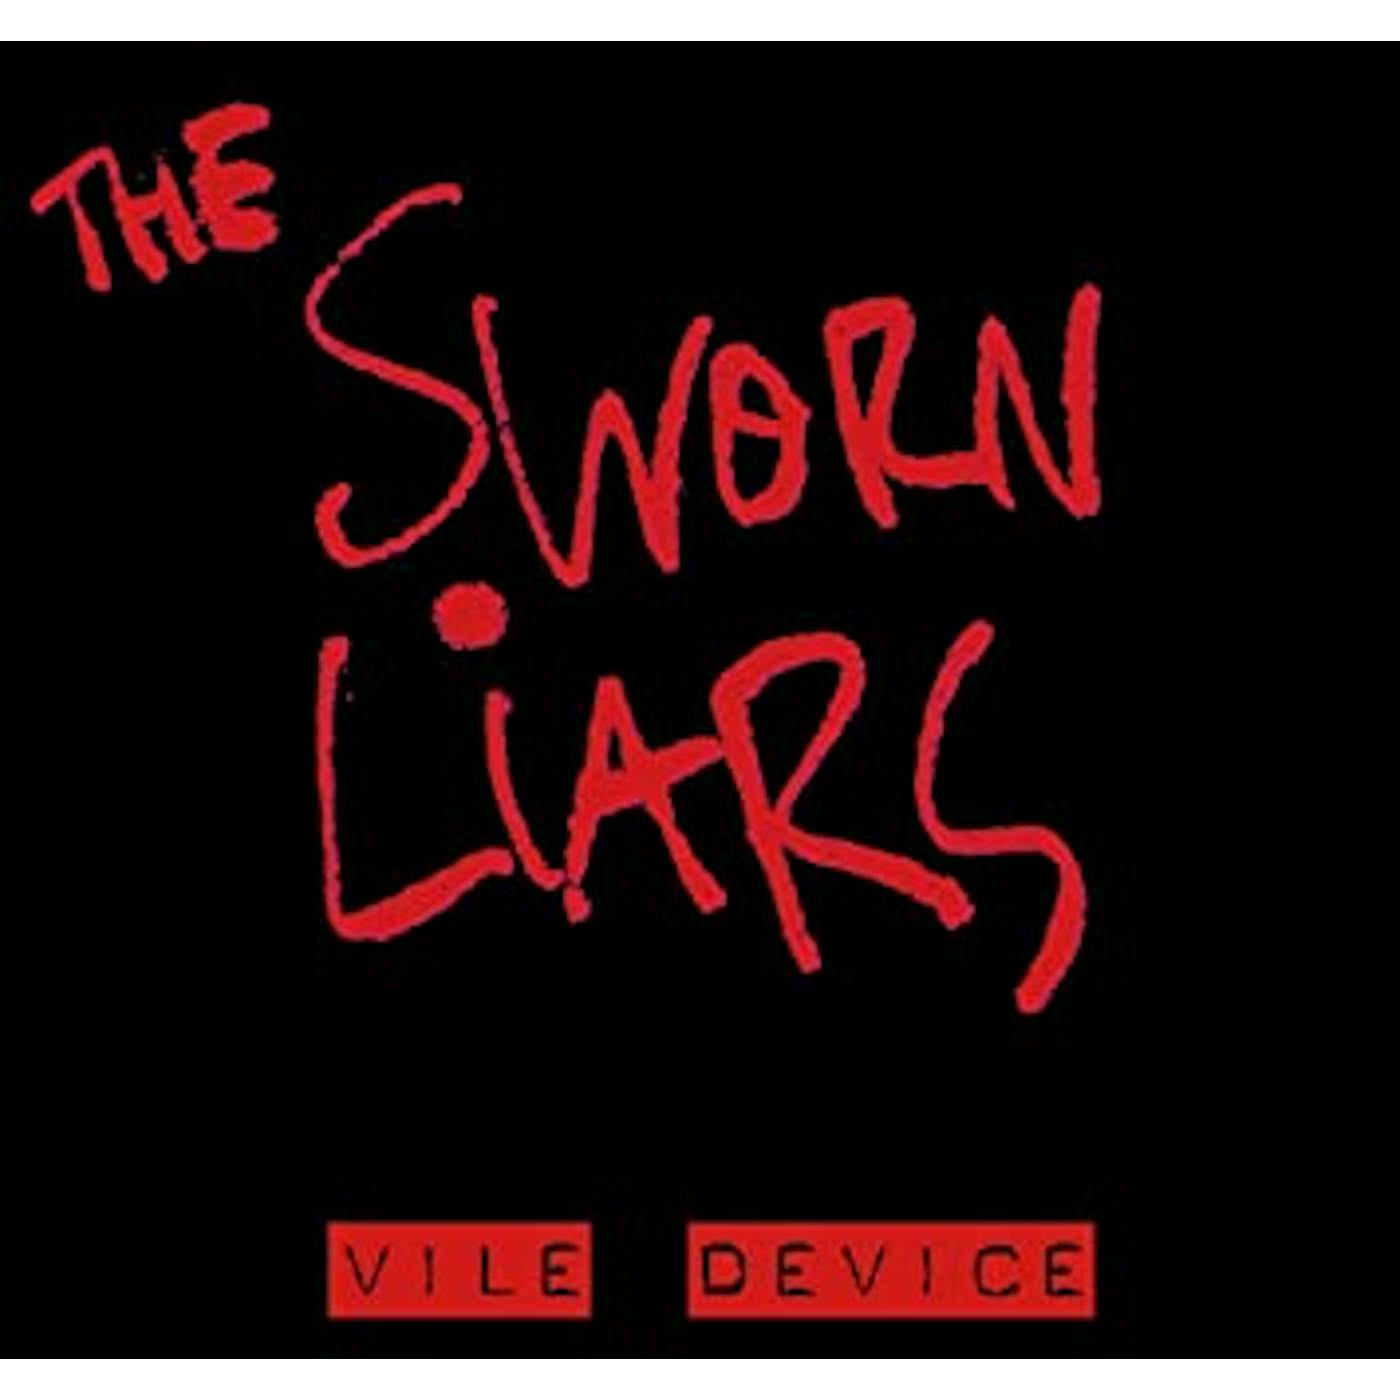 Sworn Liars VILE DEVICE Vinyl Record - Digital Download Included